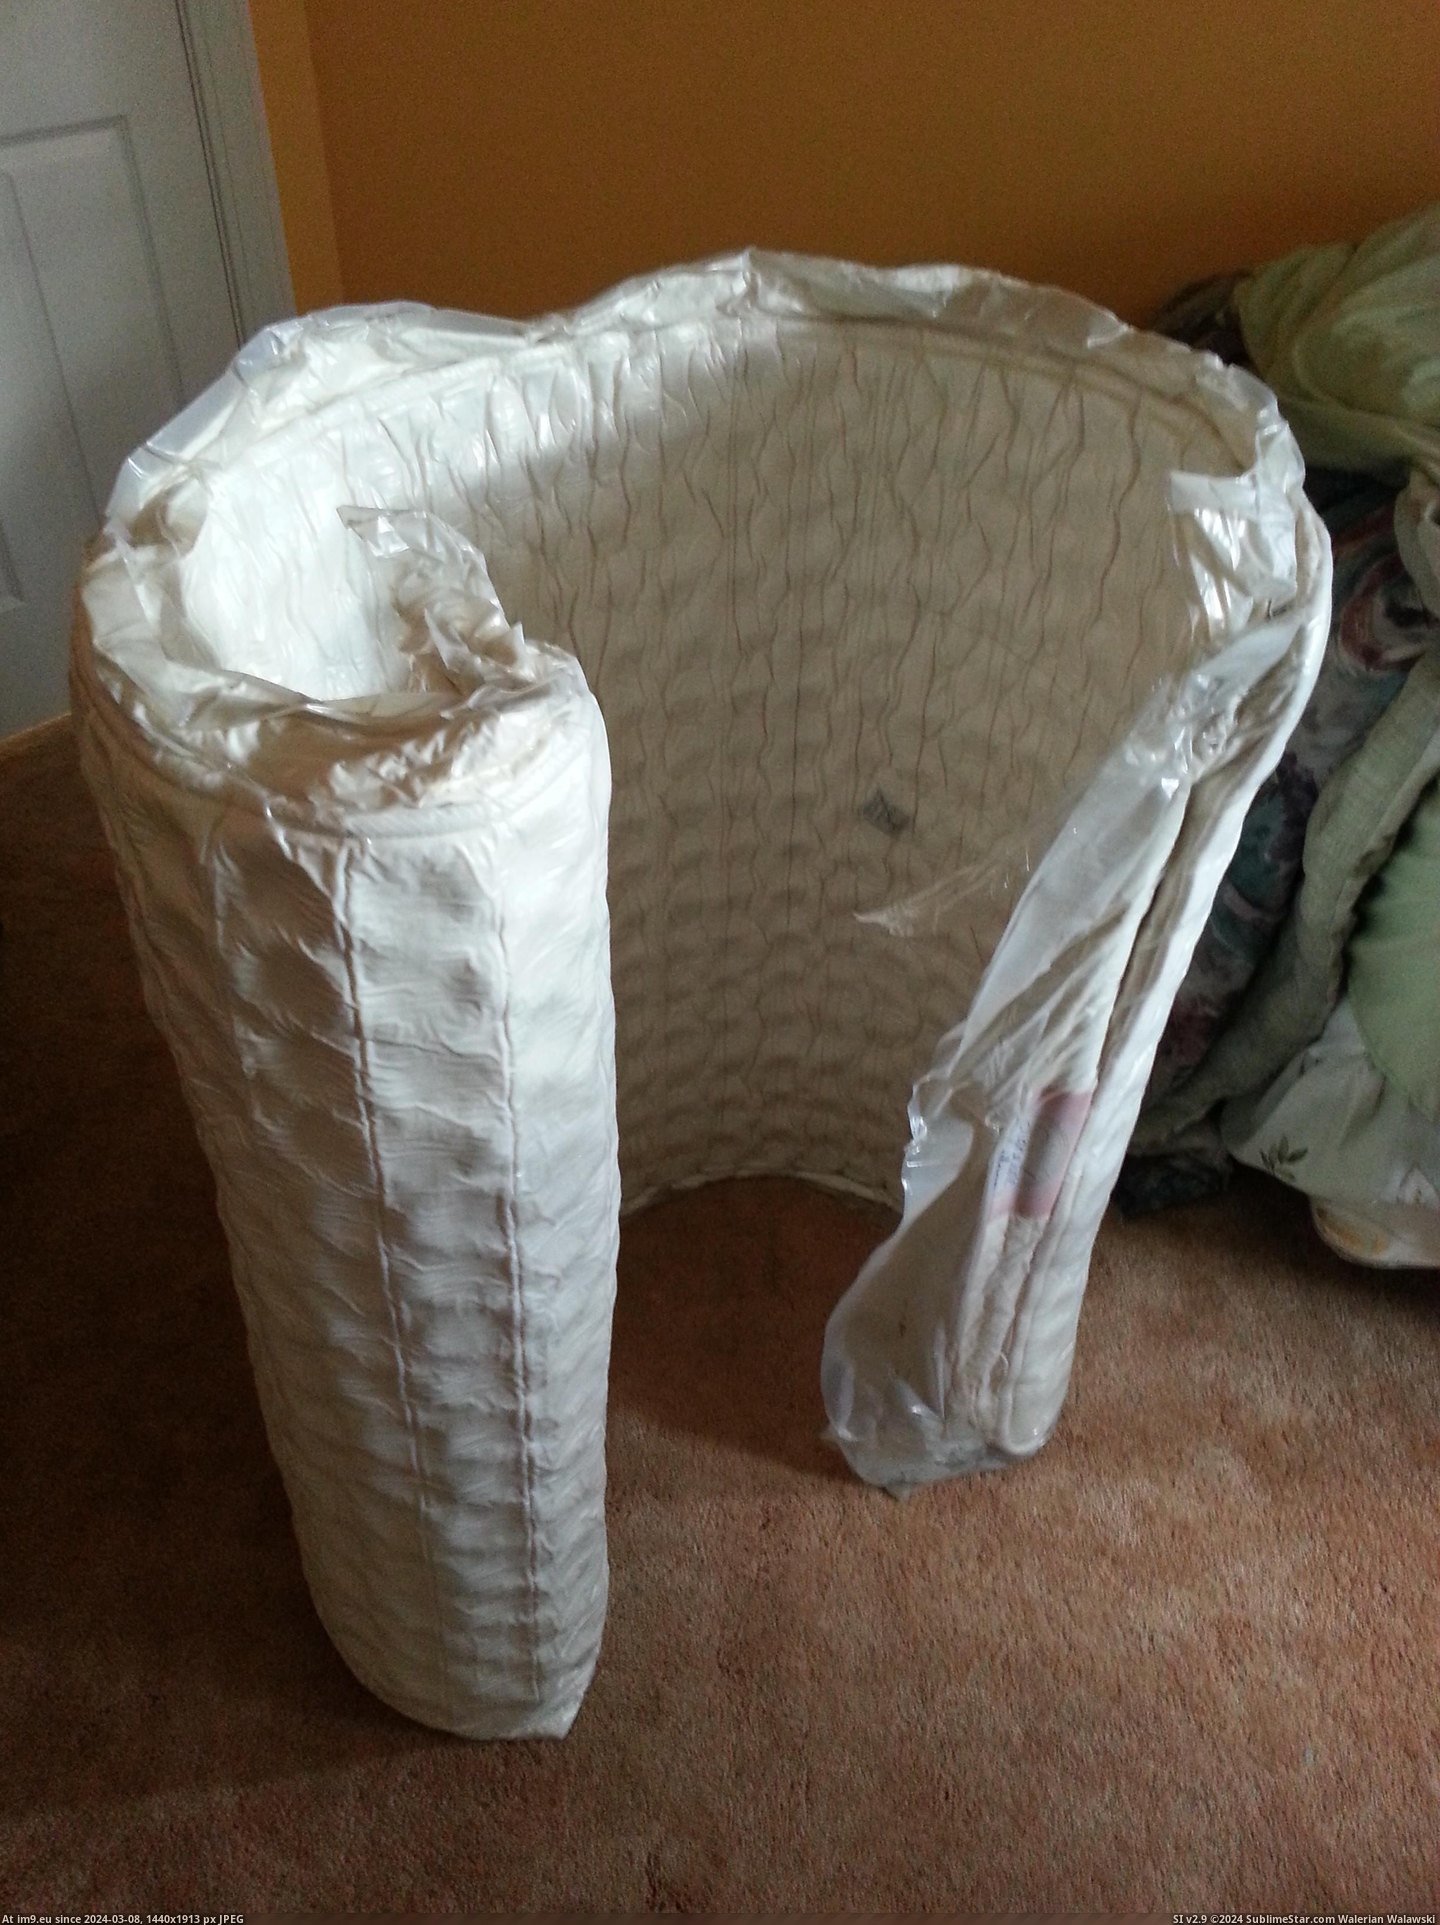 #Broke #Bag #Vacuum #Duffle #Unrolled #Seal #Mattress [Mildlyinteresting] Got a mattress in a duffle bag today, unrolled it and broke the vacuum seal 3 Pic. (Image of album My r/MILDLYINTERESTING favs))